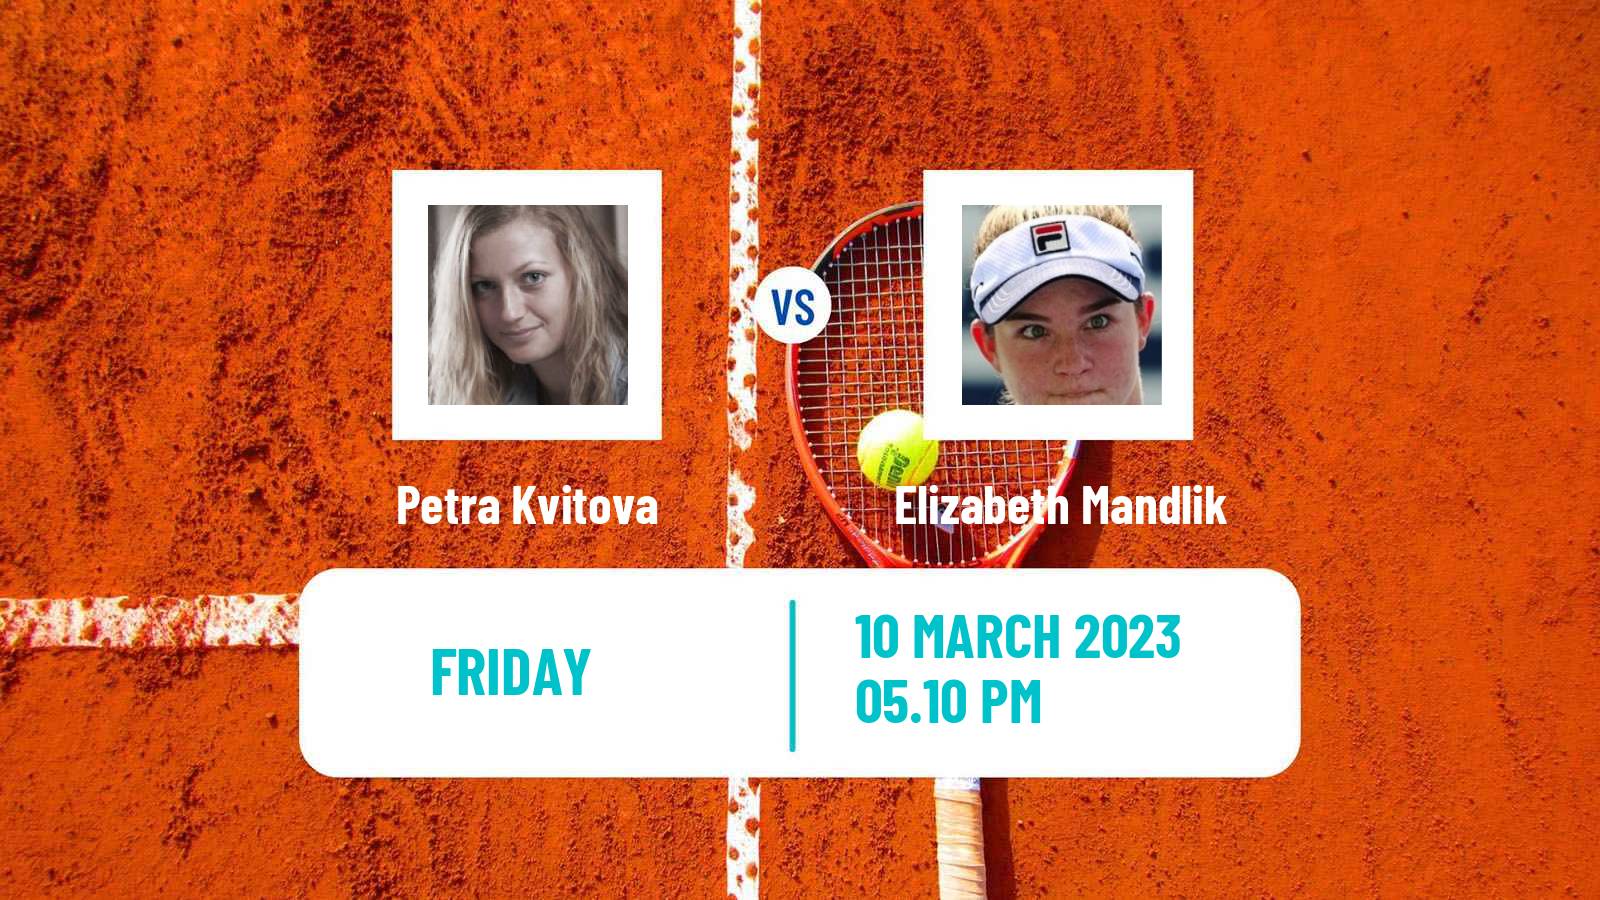 Tennis WTA Indian Wells Petra Kvitova - Elizabeth Mandlik